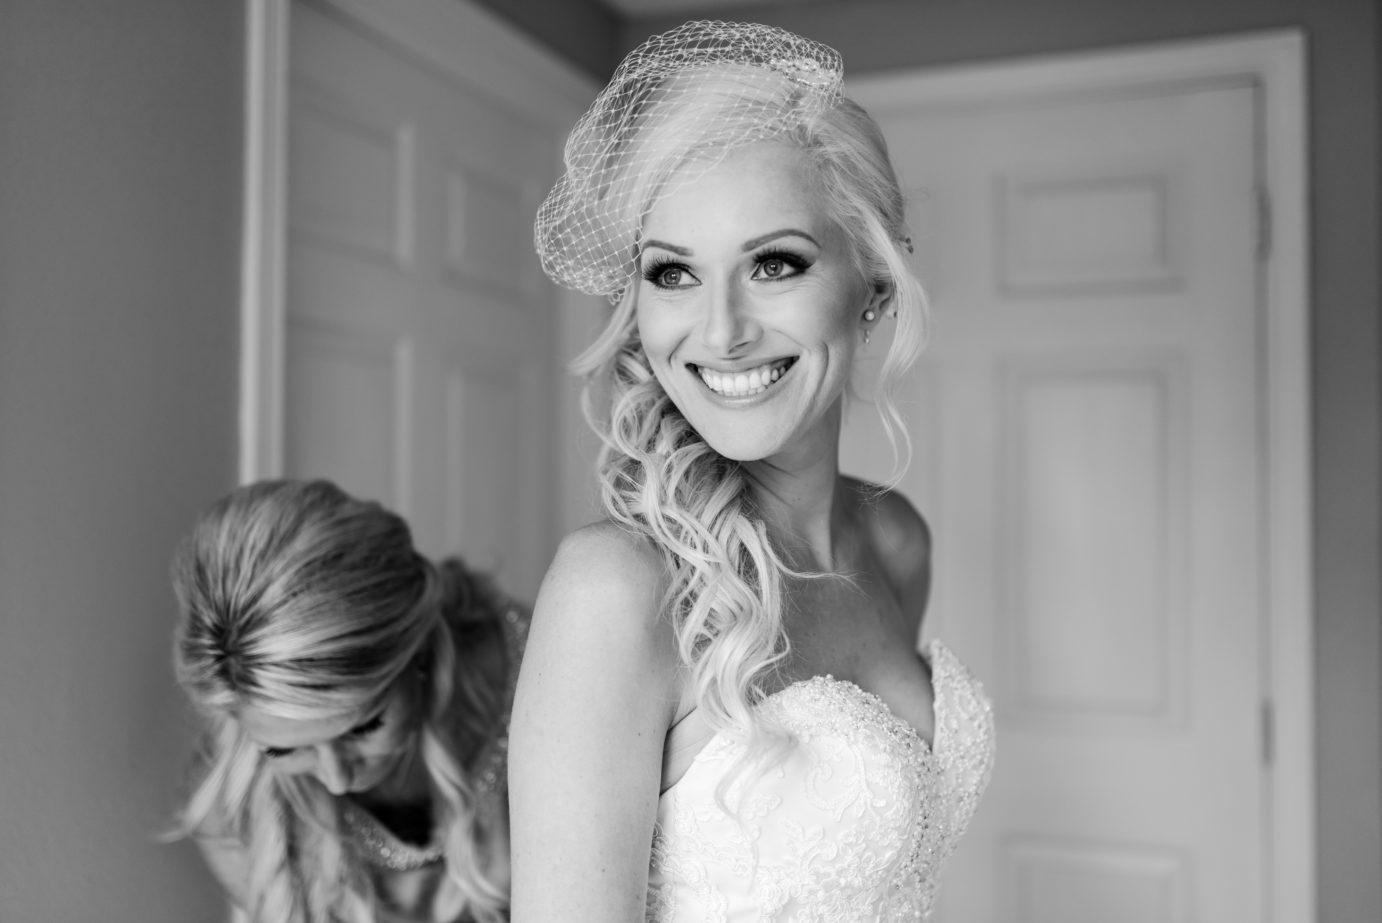 Bridal Beauty Checklist for Brides